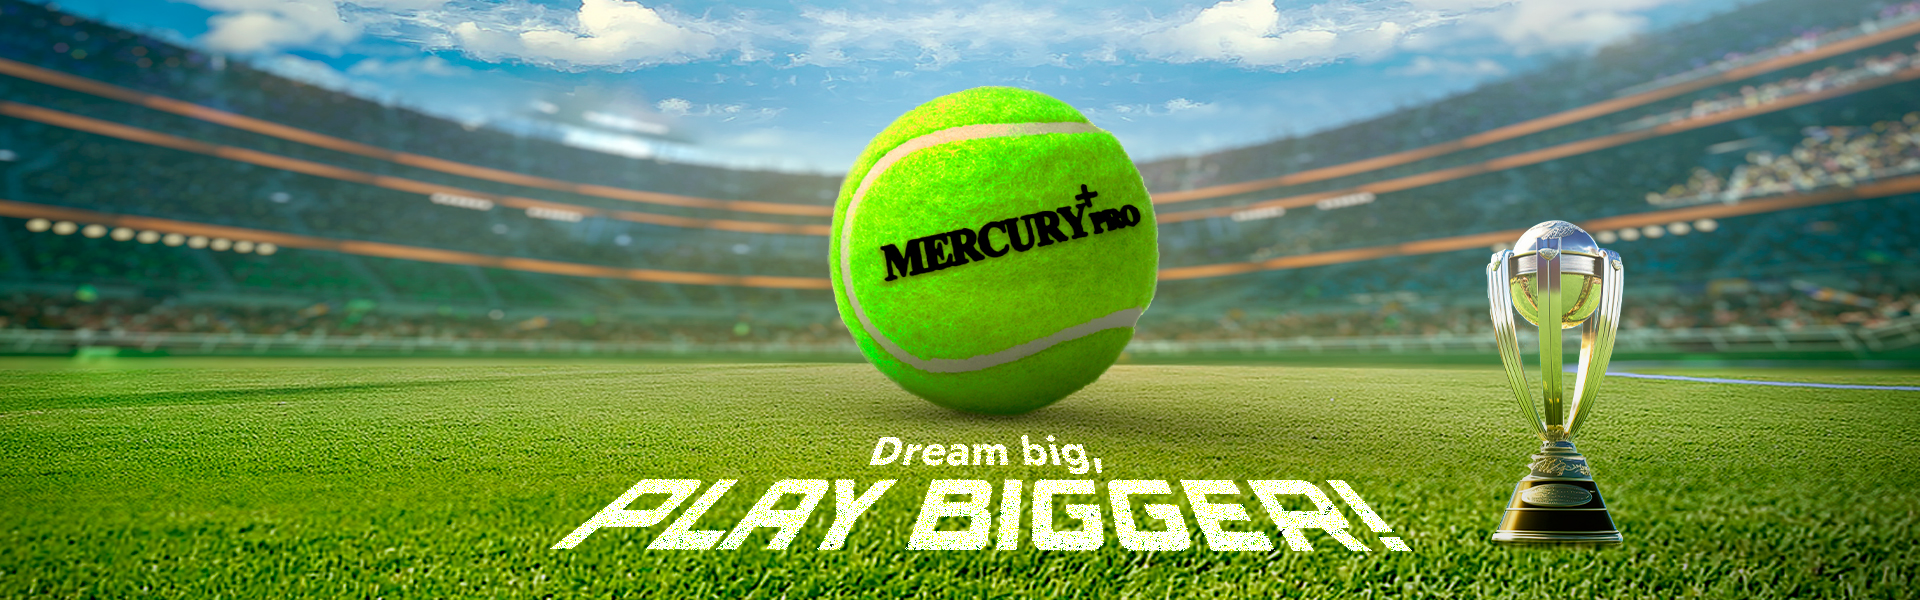 Mercury Pro Cricket Ball